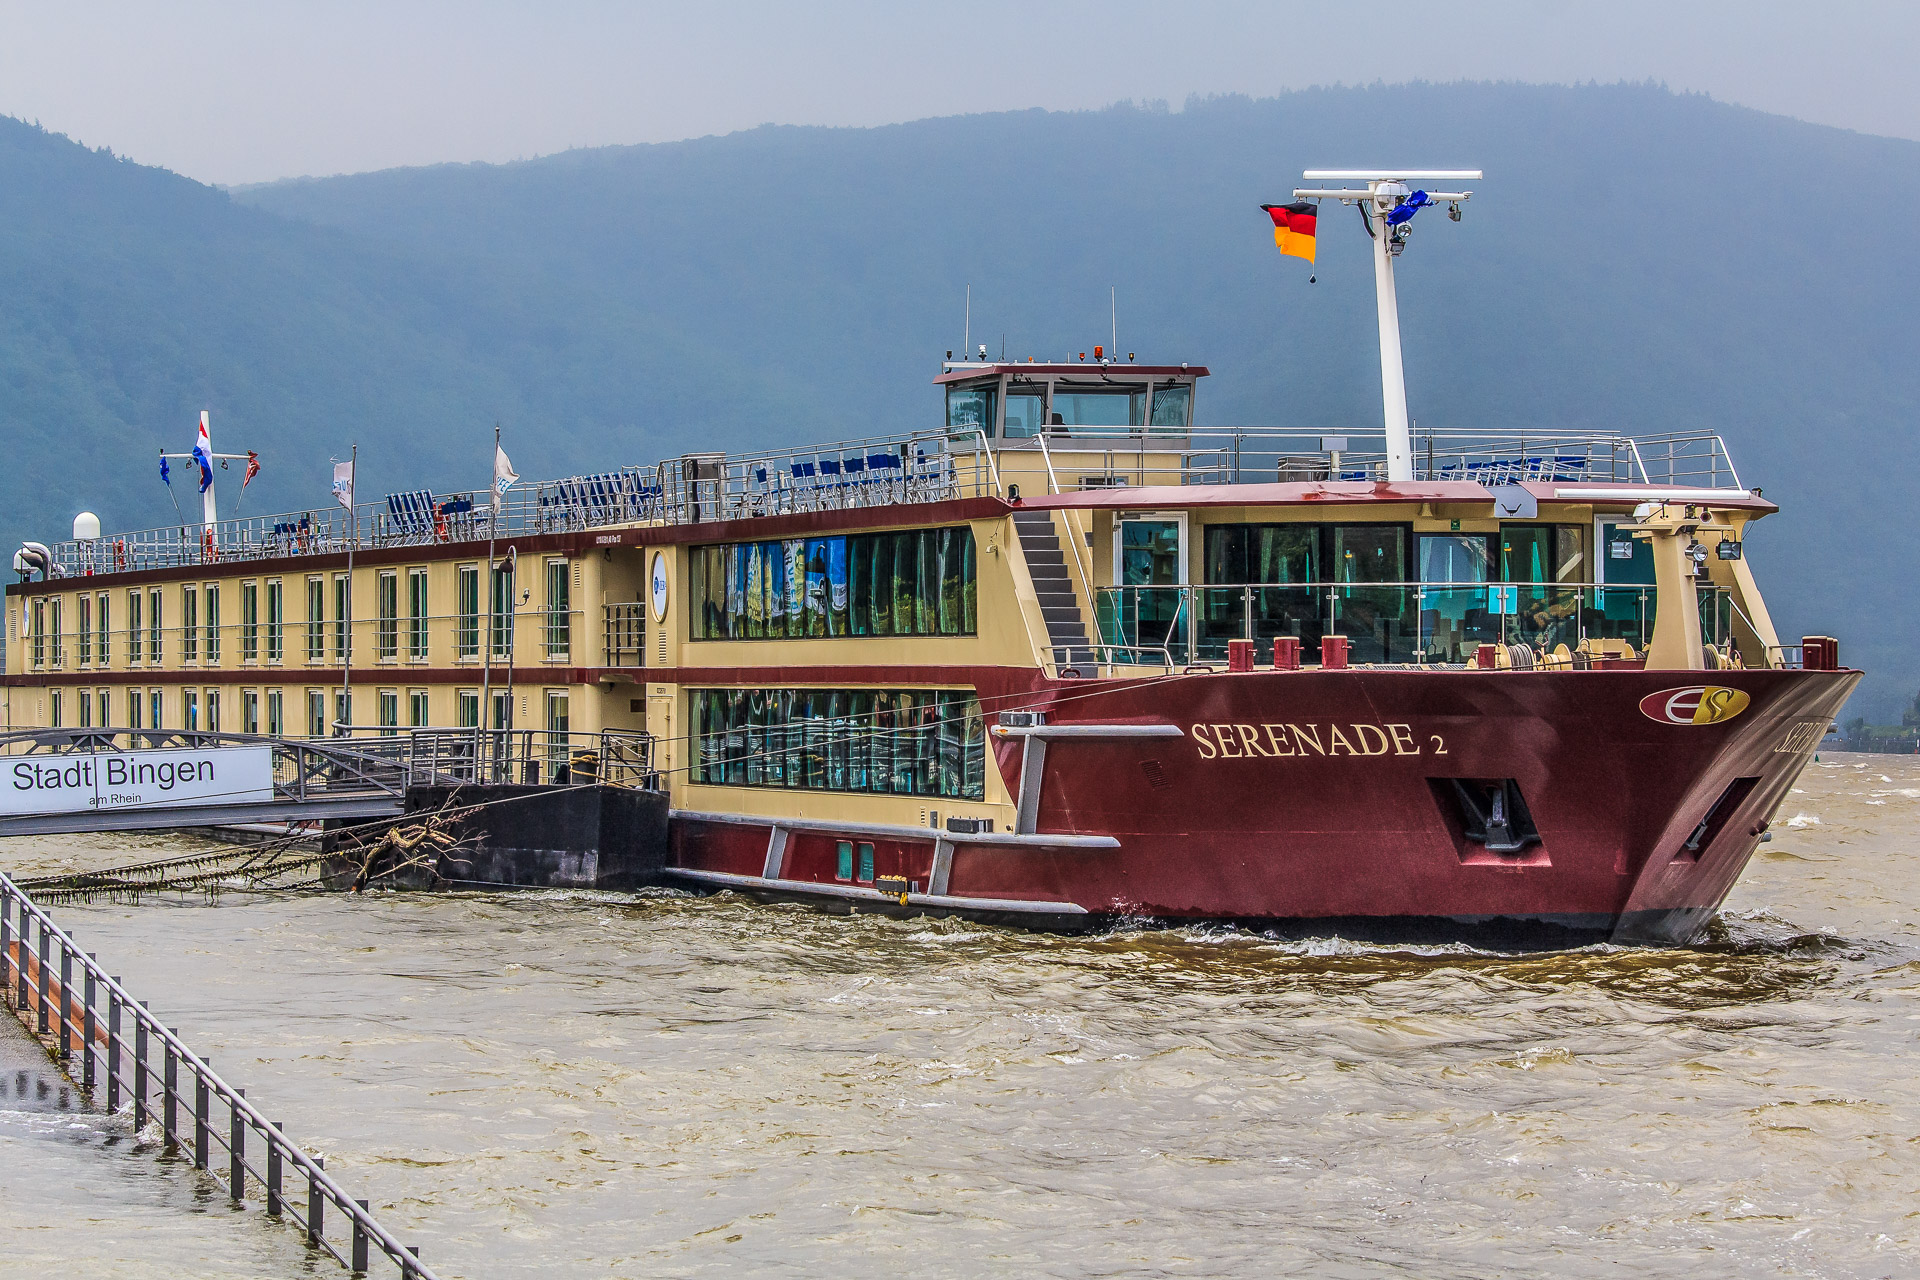 MS SERENADE 2 CRUCEROS CATAI CRUCEROS DANUBIO CRUCEROS FLUVIALES CATAI DANUBE RIVER CRUISES DANUBE CRUISES #CATAI #CrucerosDanubio #CrucerosFluviales #MSSerenade2 #CrucerosViena #CrucerosPassau #CrucerosBudapest #CrucerosBratislava #Viena #Passau #Melk #Bratislava #CrucerosMelk #Budapest #Danubio #Danube #DanubeCruises #Creuers #Bidaiak #Cruceros #CrucerosFluviales #Vacaciones #TerceraEdad #VacacionesTerceraEdad #CrucerosCatai #CATAIcruises #CATAItravel #ViajesCATAI